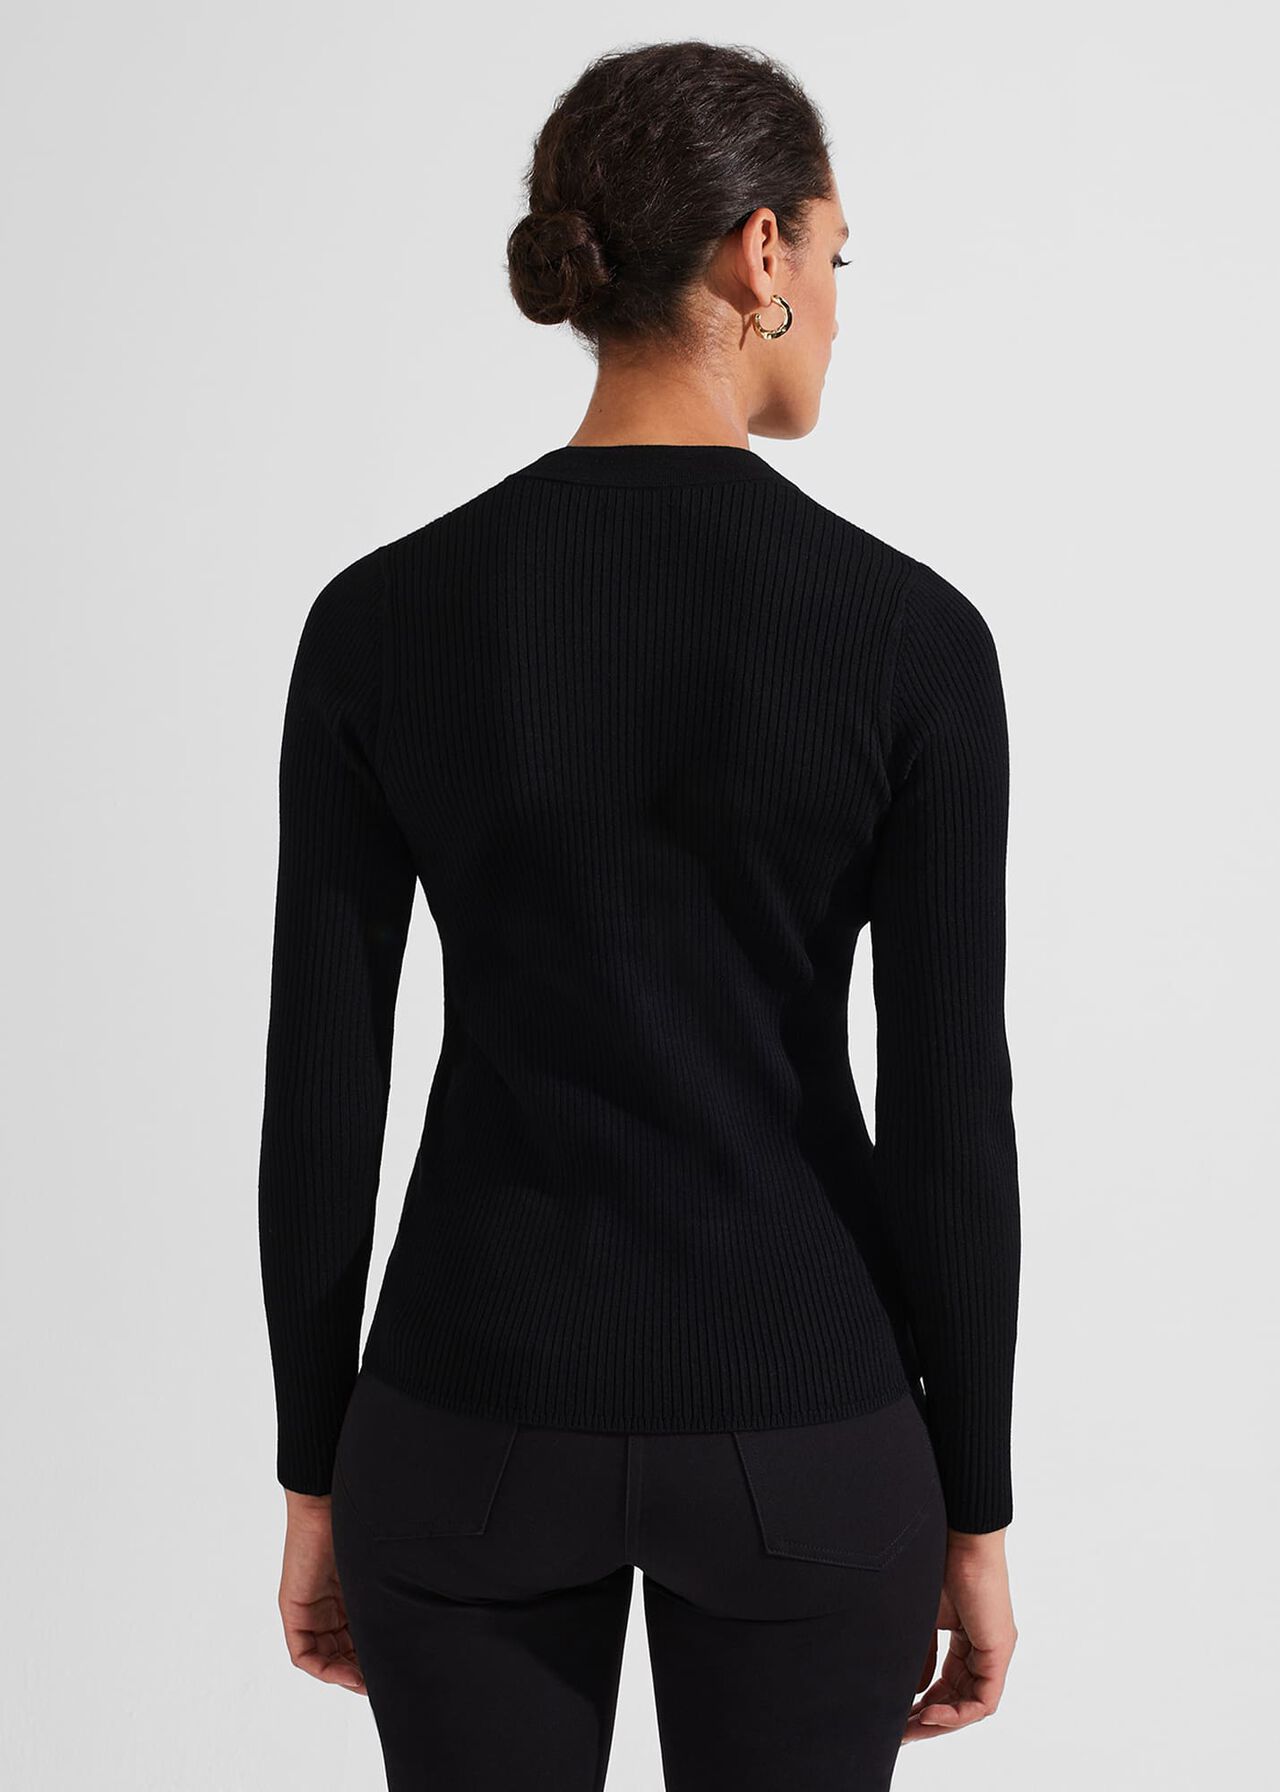 Kaya Ribbed Sweater, Black, hi-res